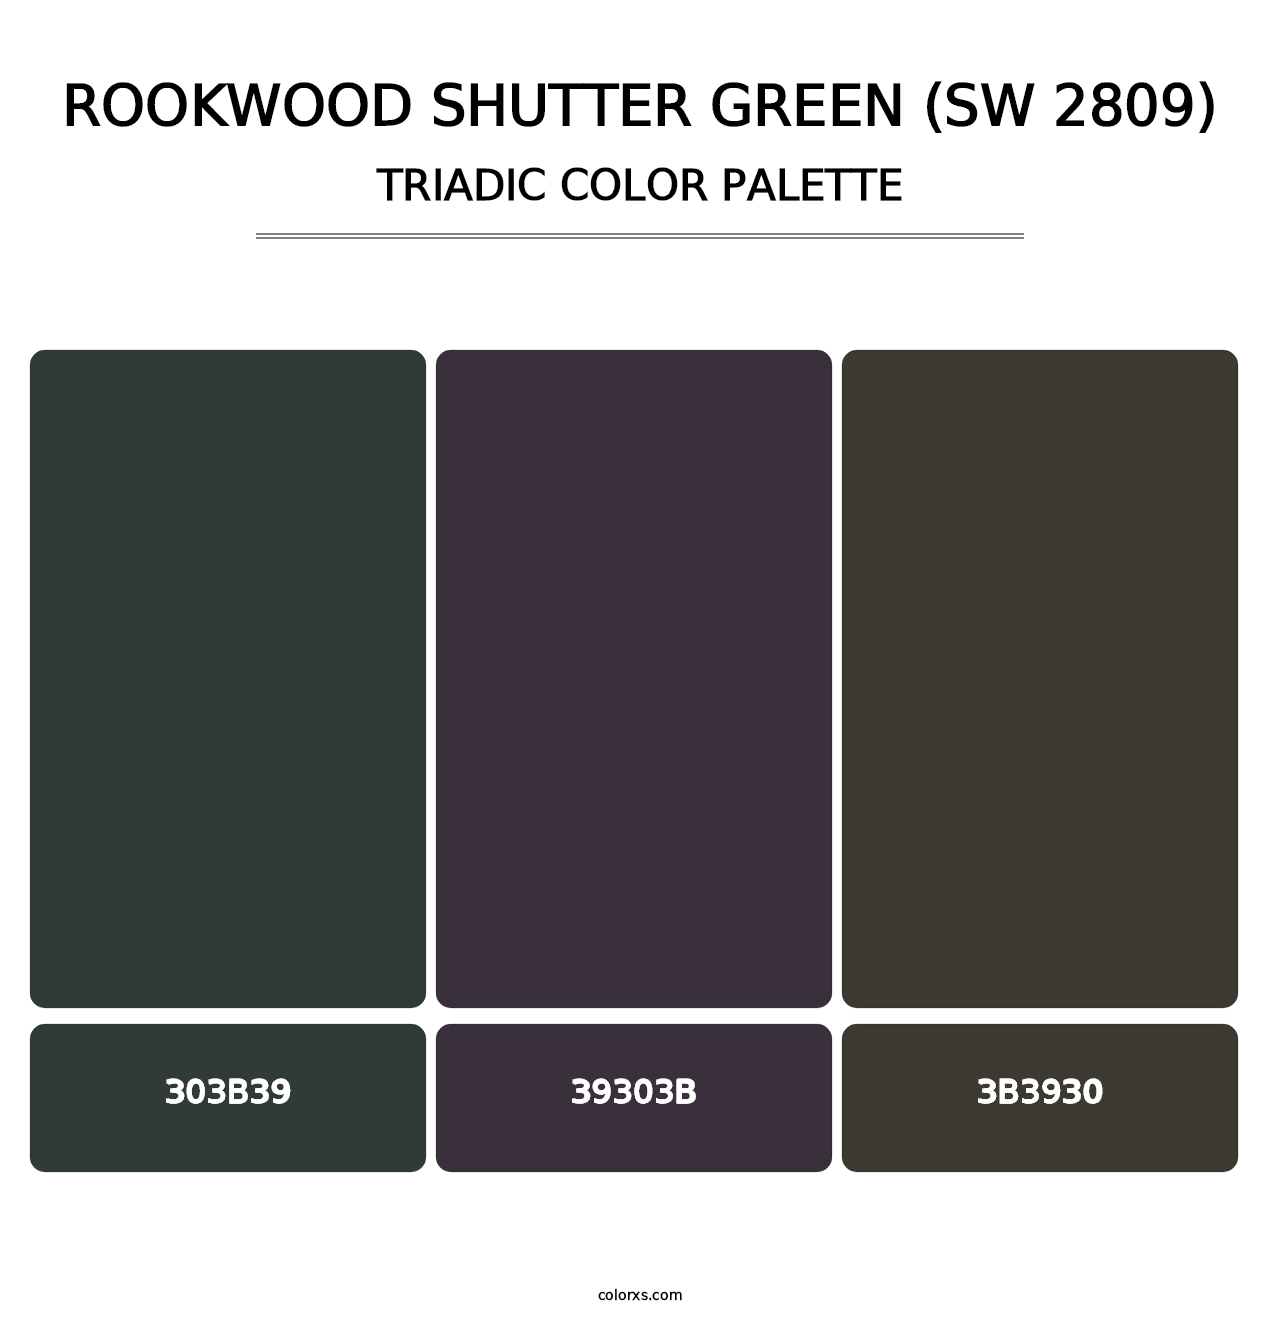 Rookwood Shutter Green (SW 2809) - Triadic Color Palette